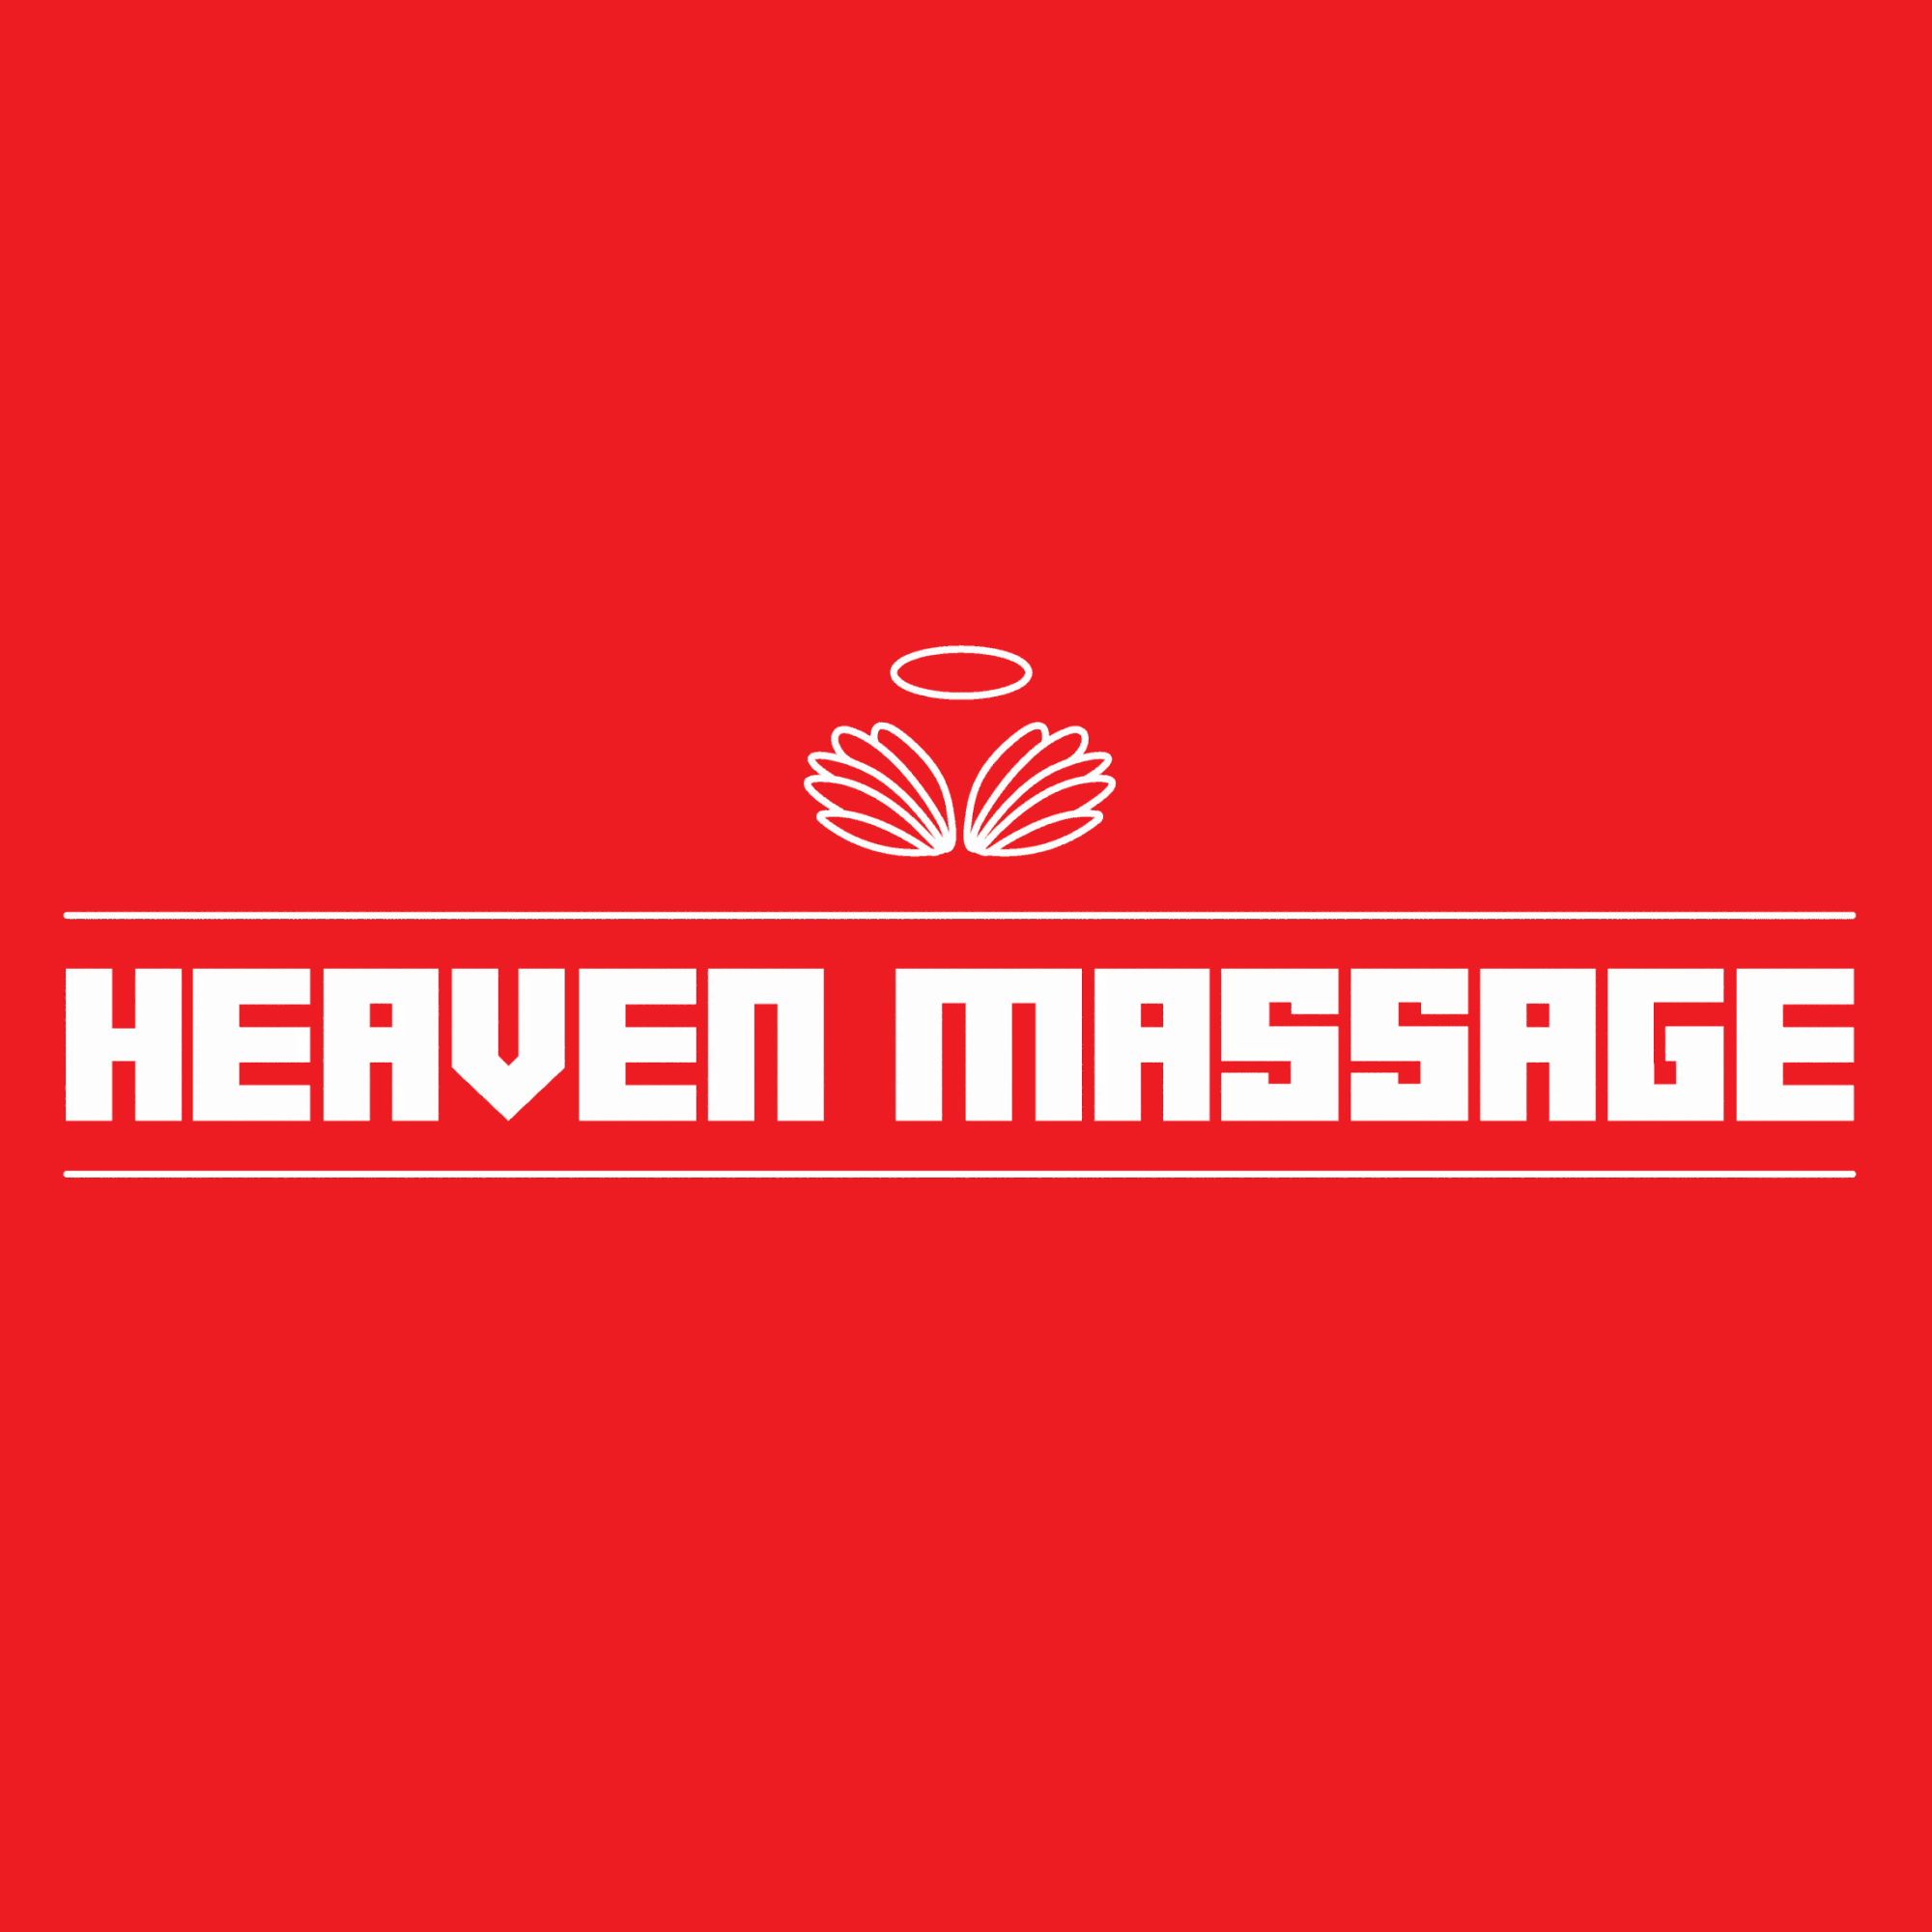 heavenshop-bkk logo Heaven Nuru Massage Nuru Massage Best Nuru Massage Erotic Massage 努魯按摩 天堂努魯按摩